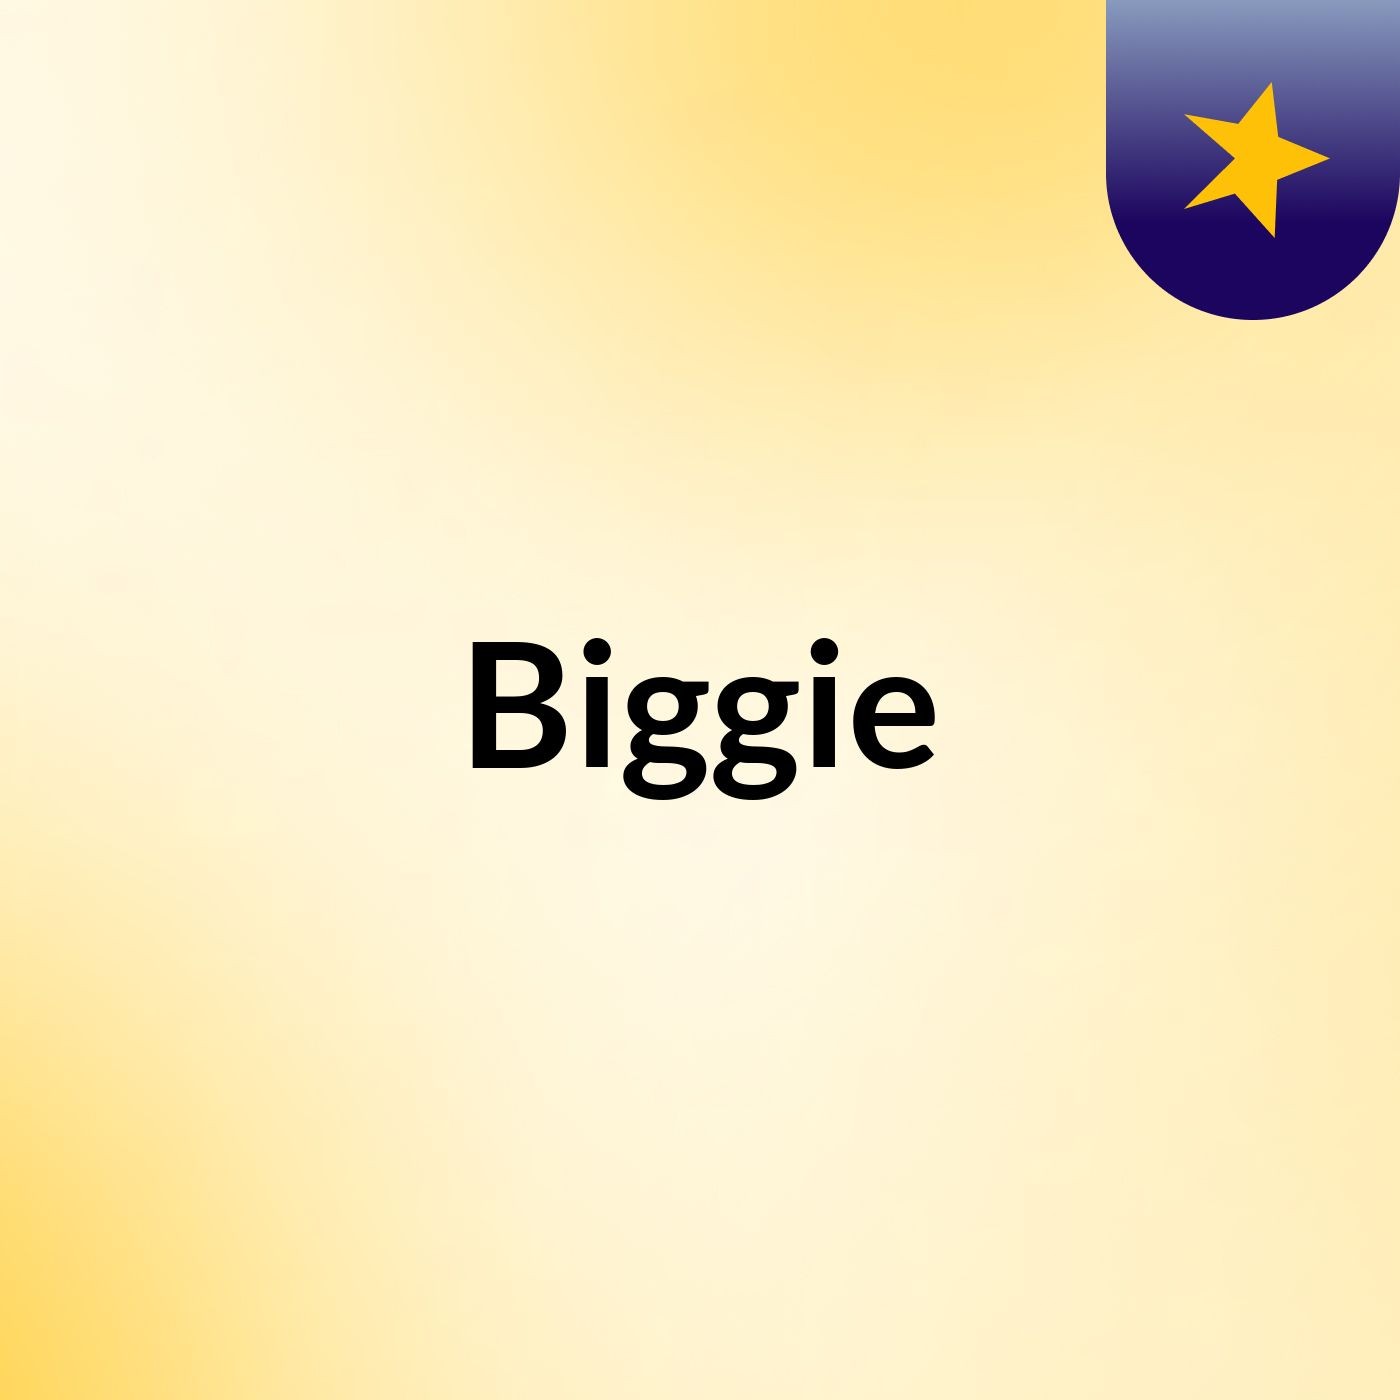 Episode 3 - Biggie